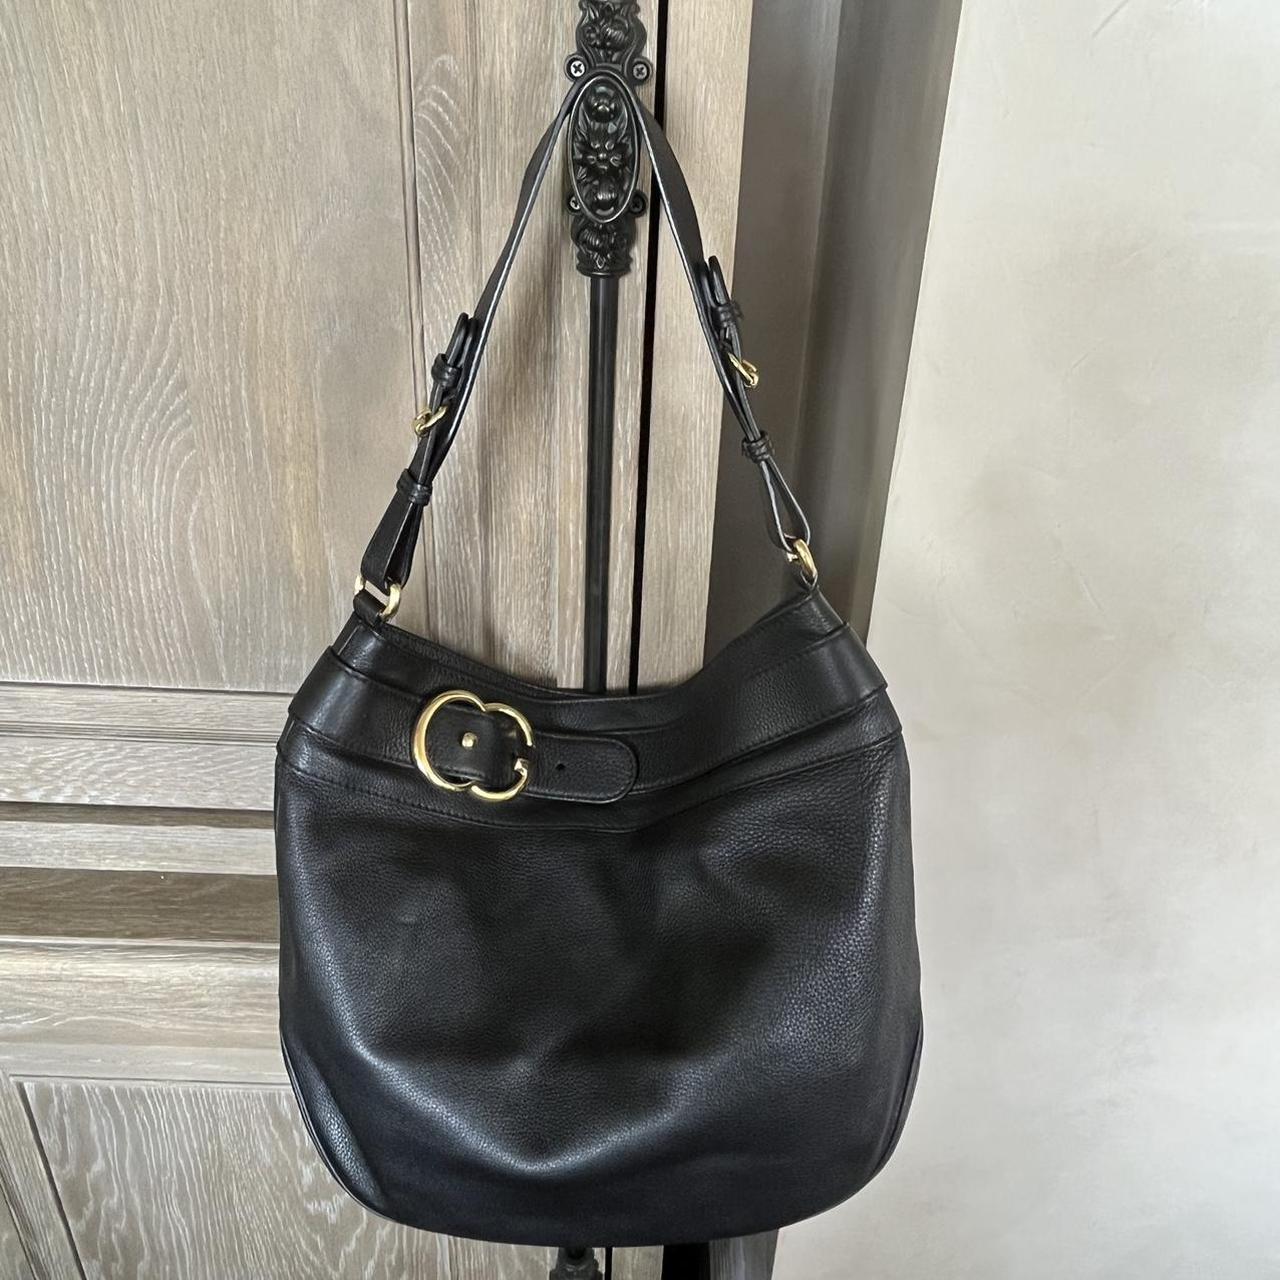 Gucci Women's Black Bag